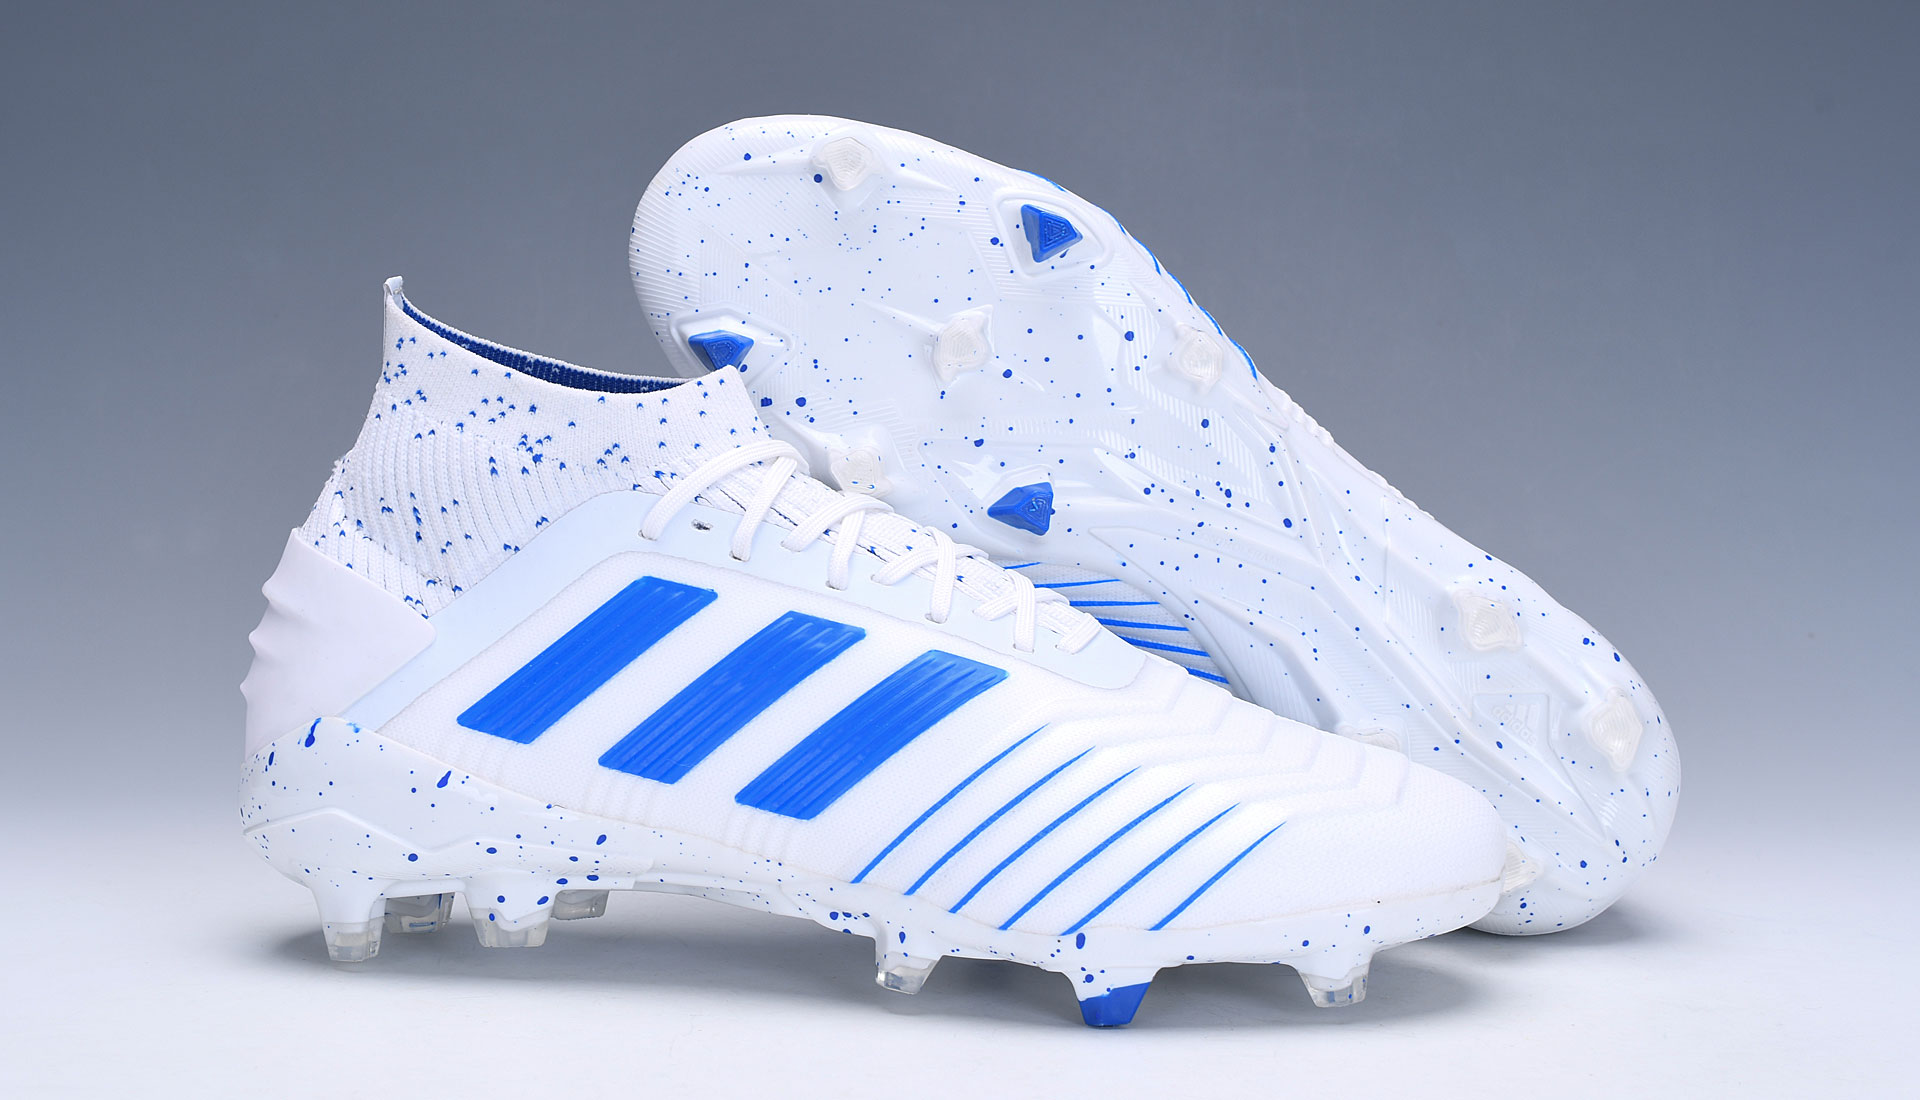 Adidas PREDATOR 19+ FG Firm Ground 'White Blue' Soccer Cleats BC0548 - Premium Quality Footwear for Enhanced Performance